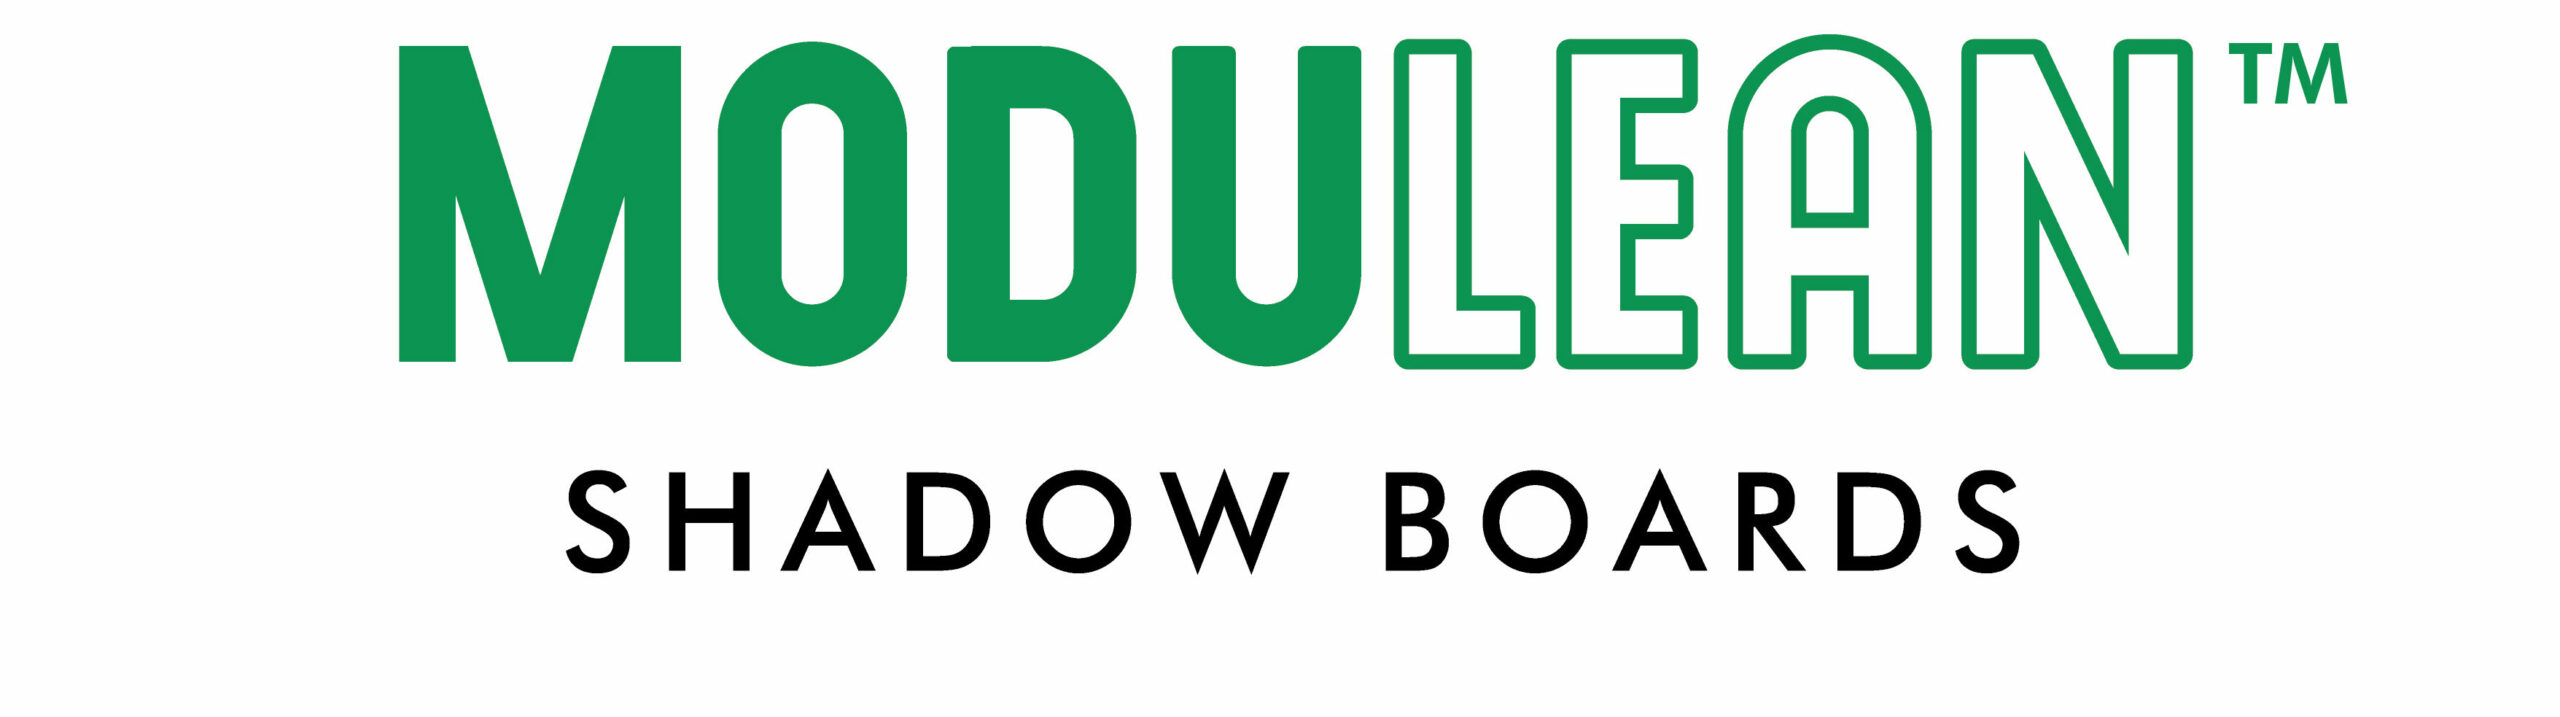 MODULEAN™ modulean shadow boards logo blog 5s lean system vis comm boards